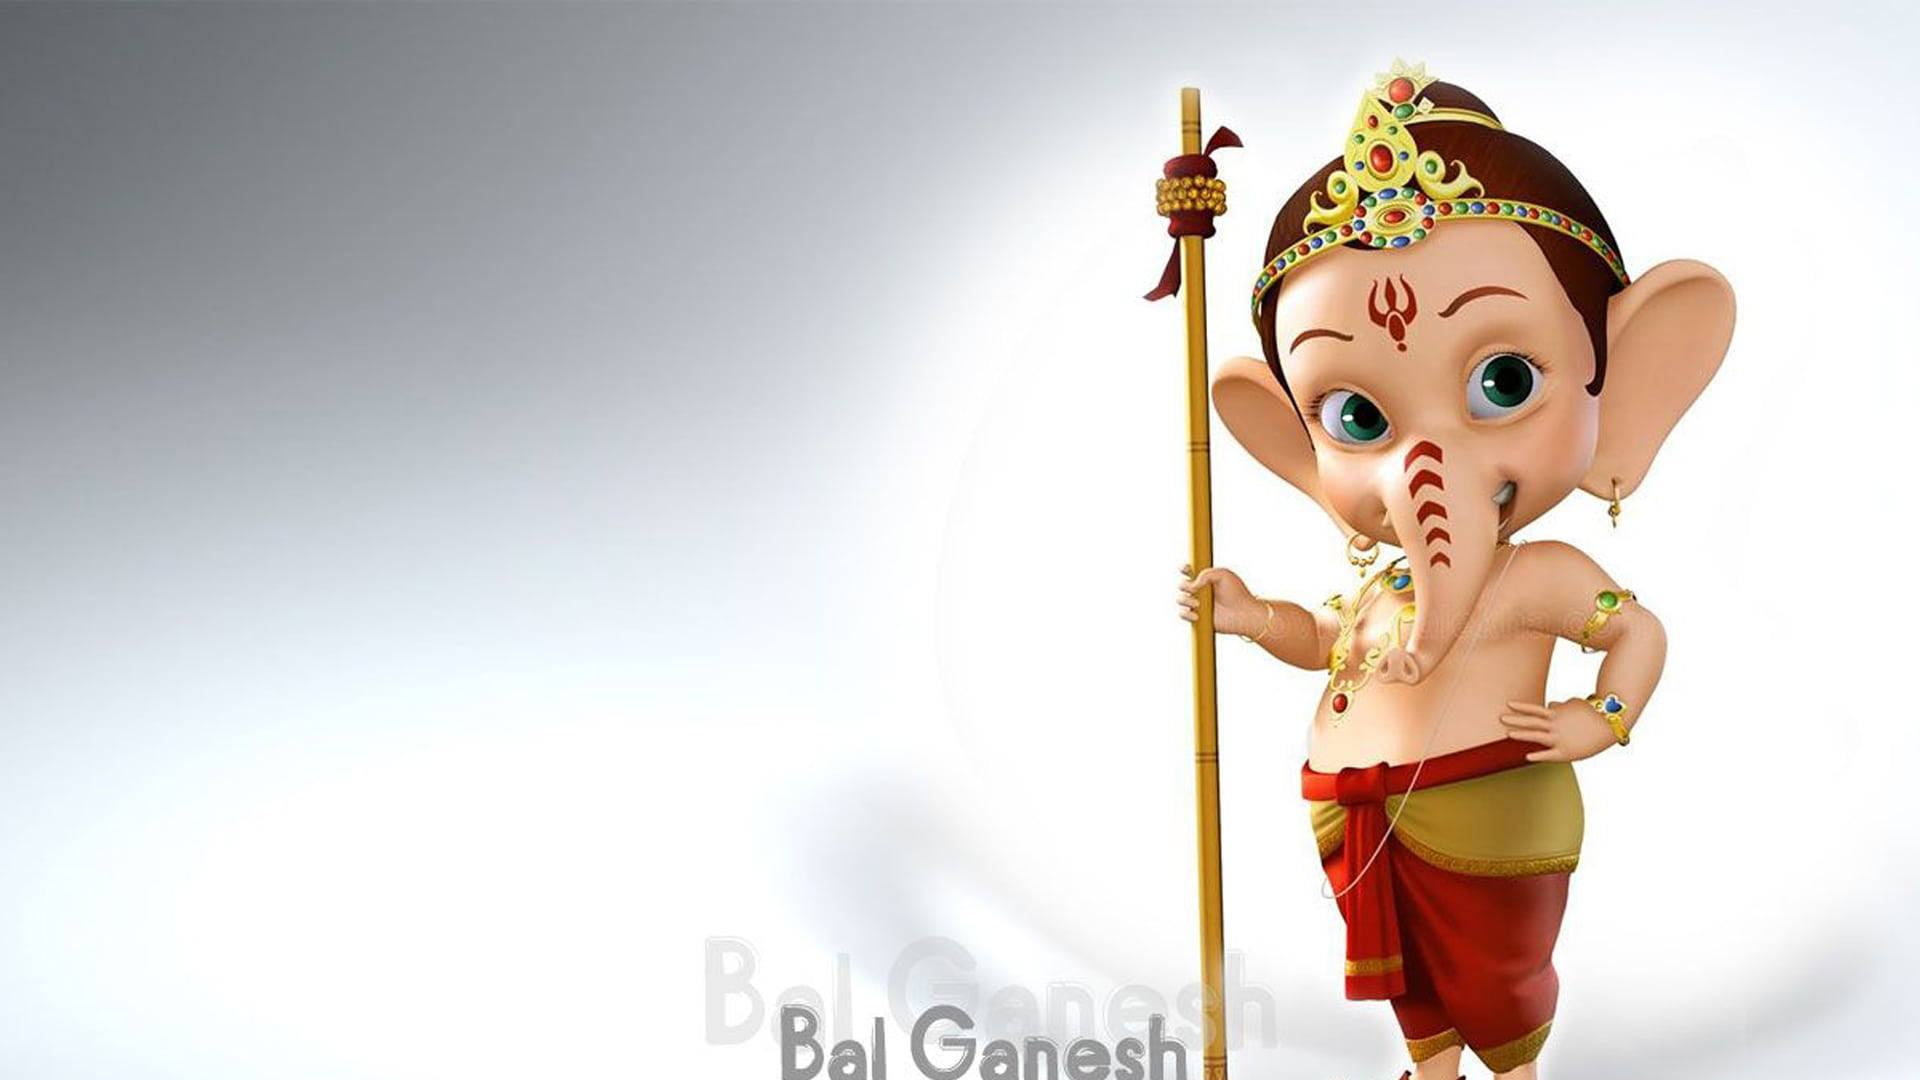 Free Ganesh Full Hd Wallpaper Downloads, [100+] Ganesh Full Hd Wallpapers  for FREE 